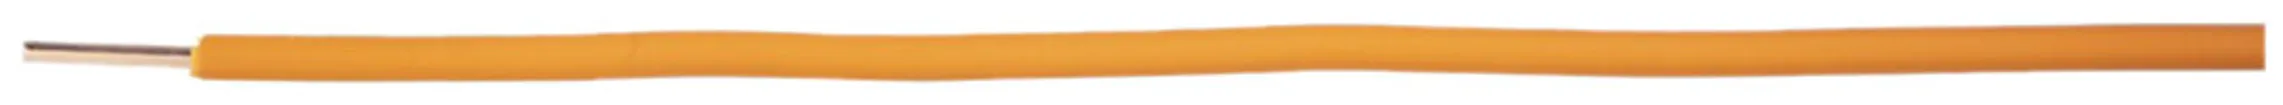 Filo N H07Z1-U senza alogeno 1.5mm² 450/750V arancione Cca 